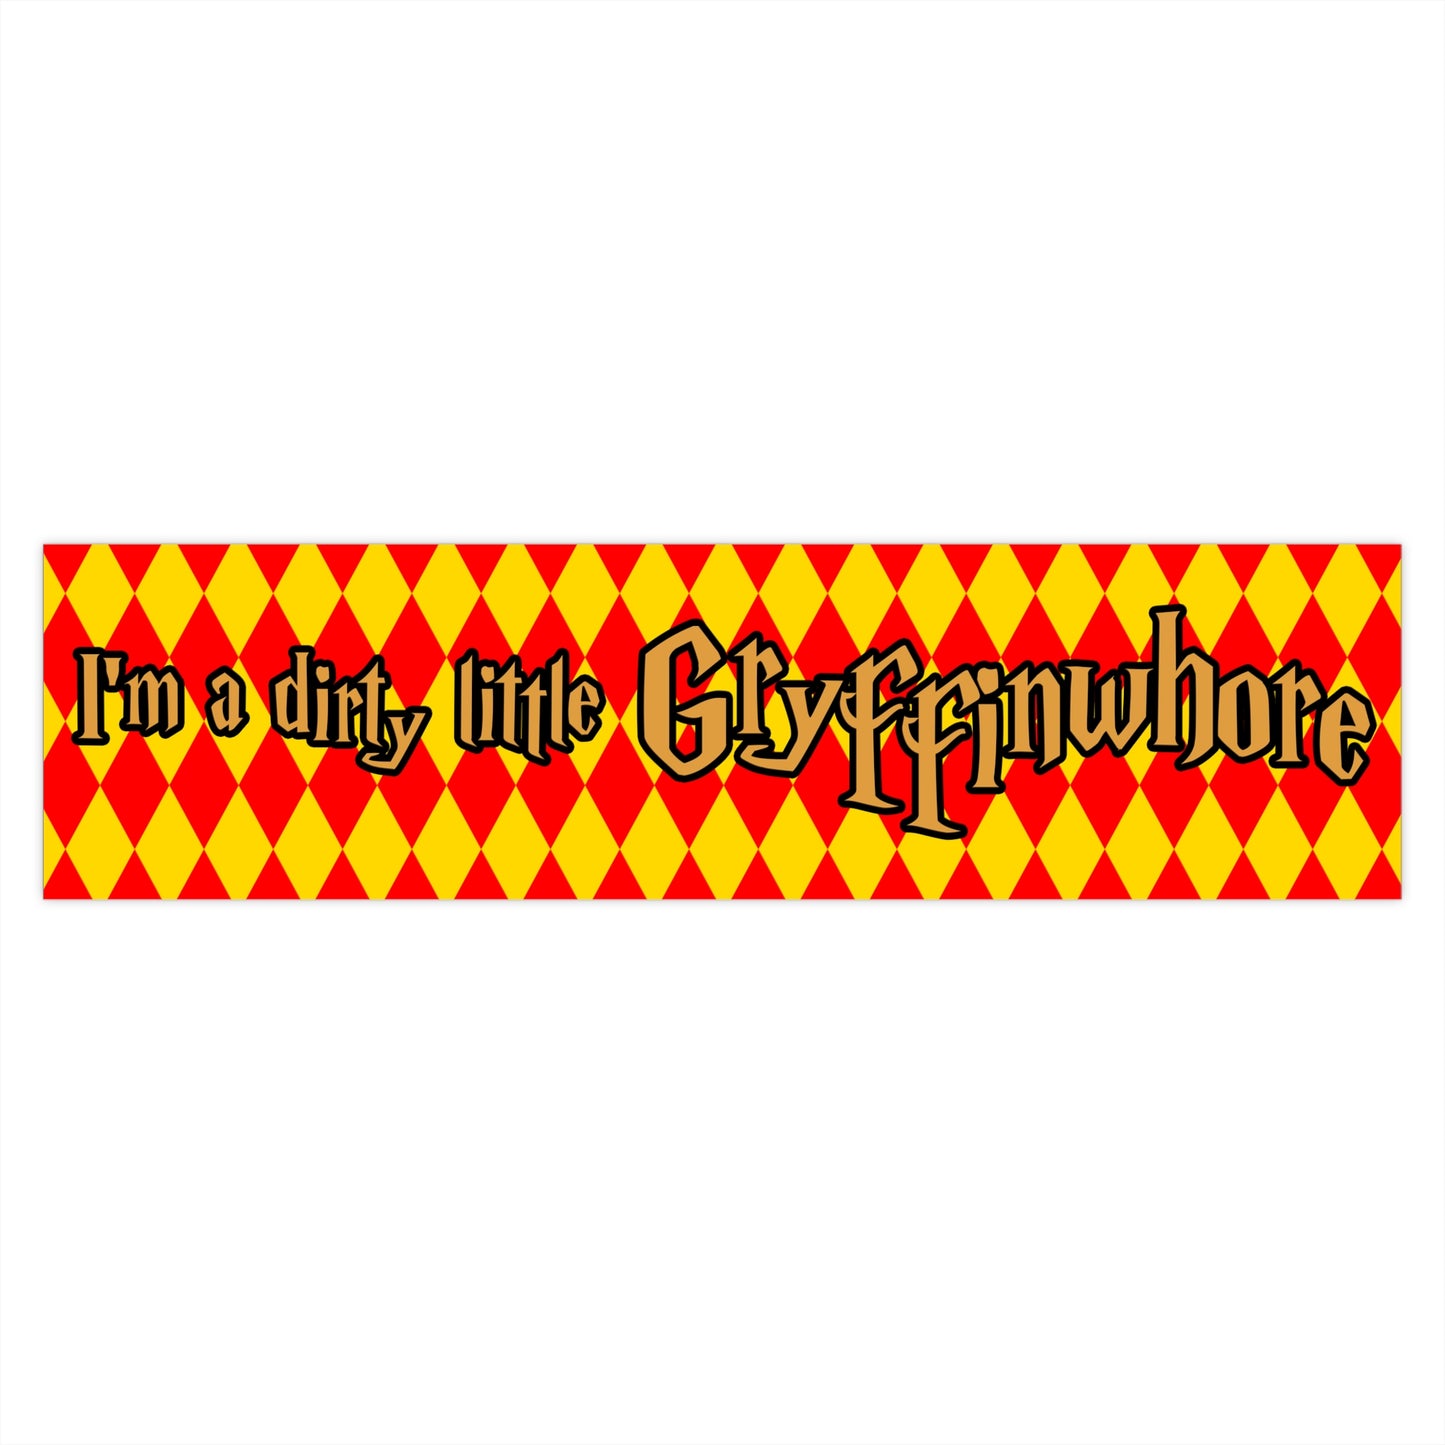 Dirty Potter Gryffinwhore bumper sticker